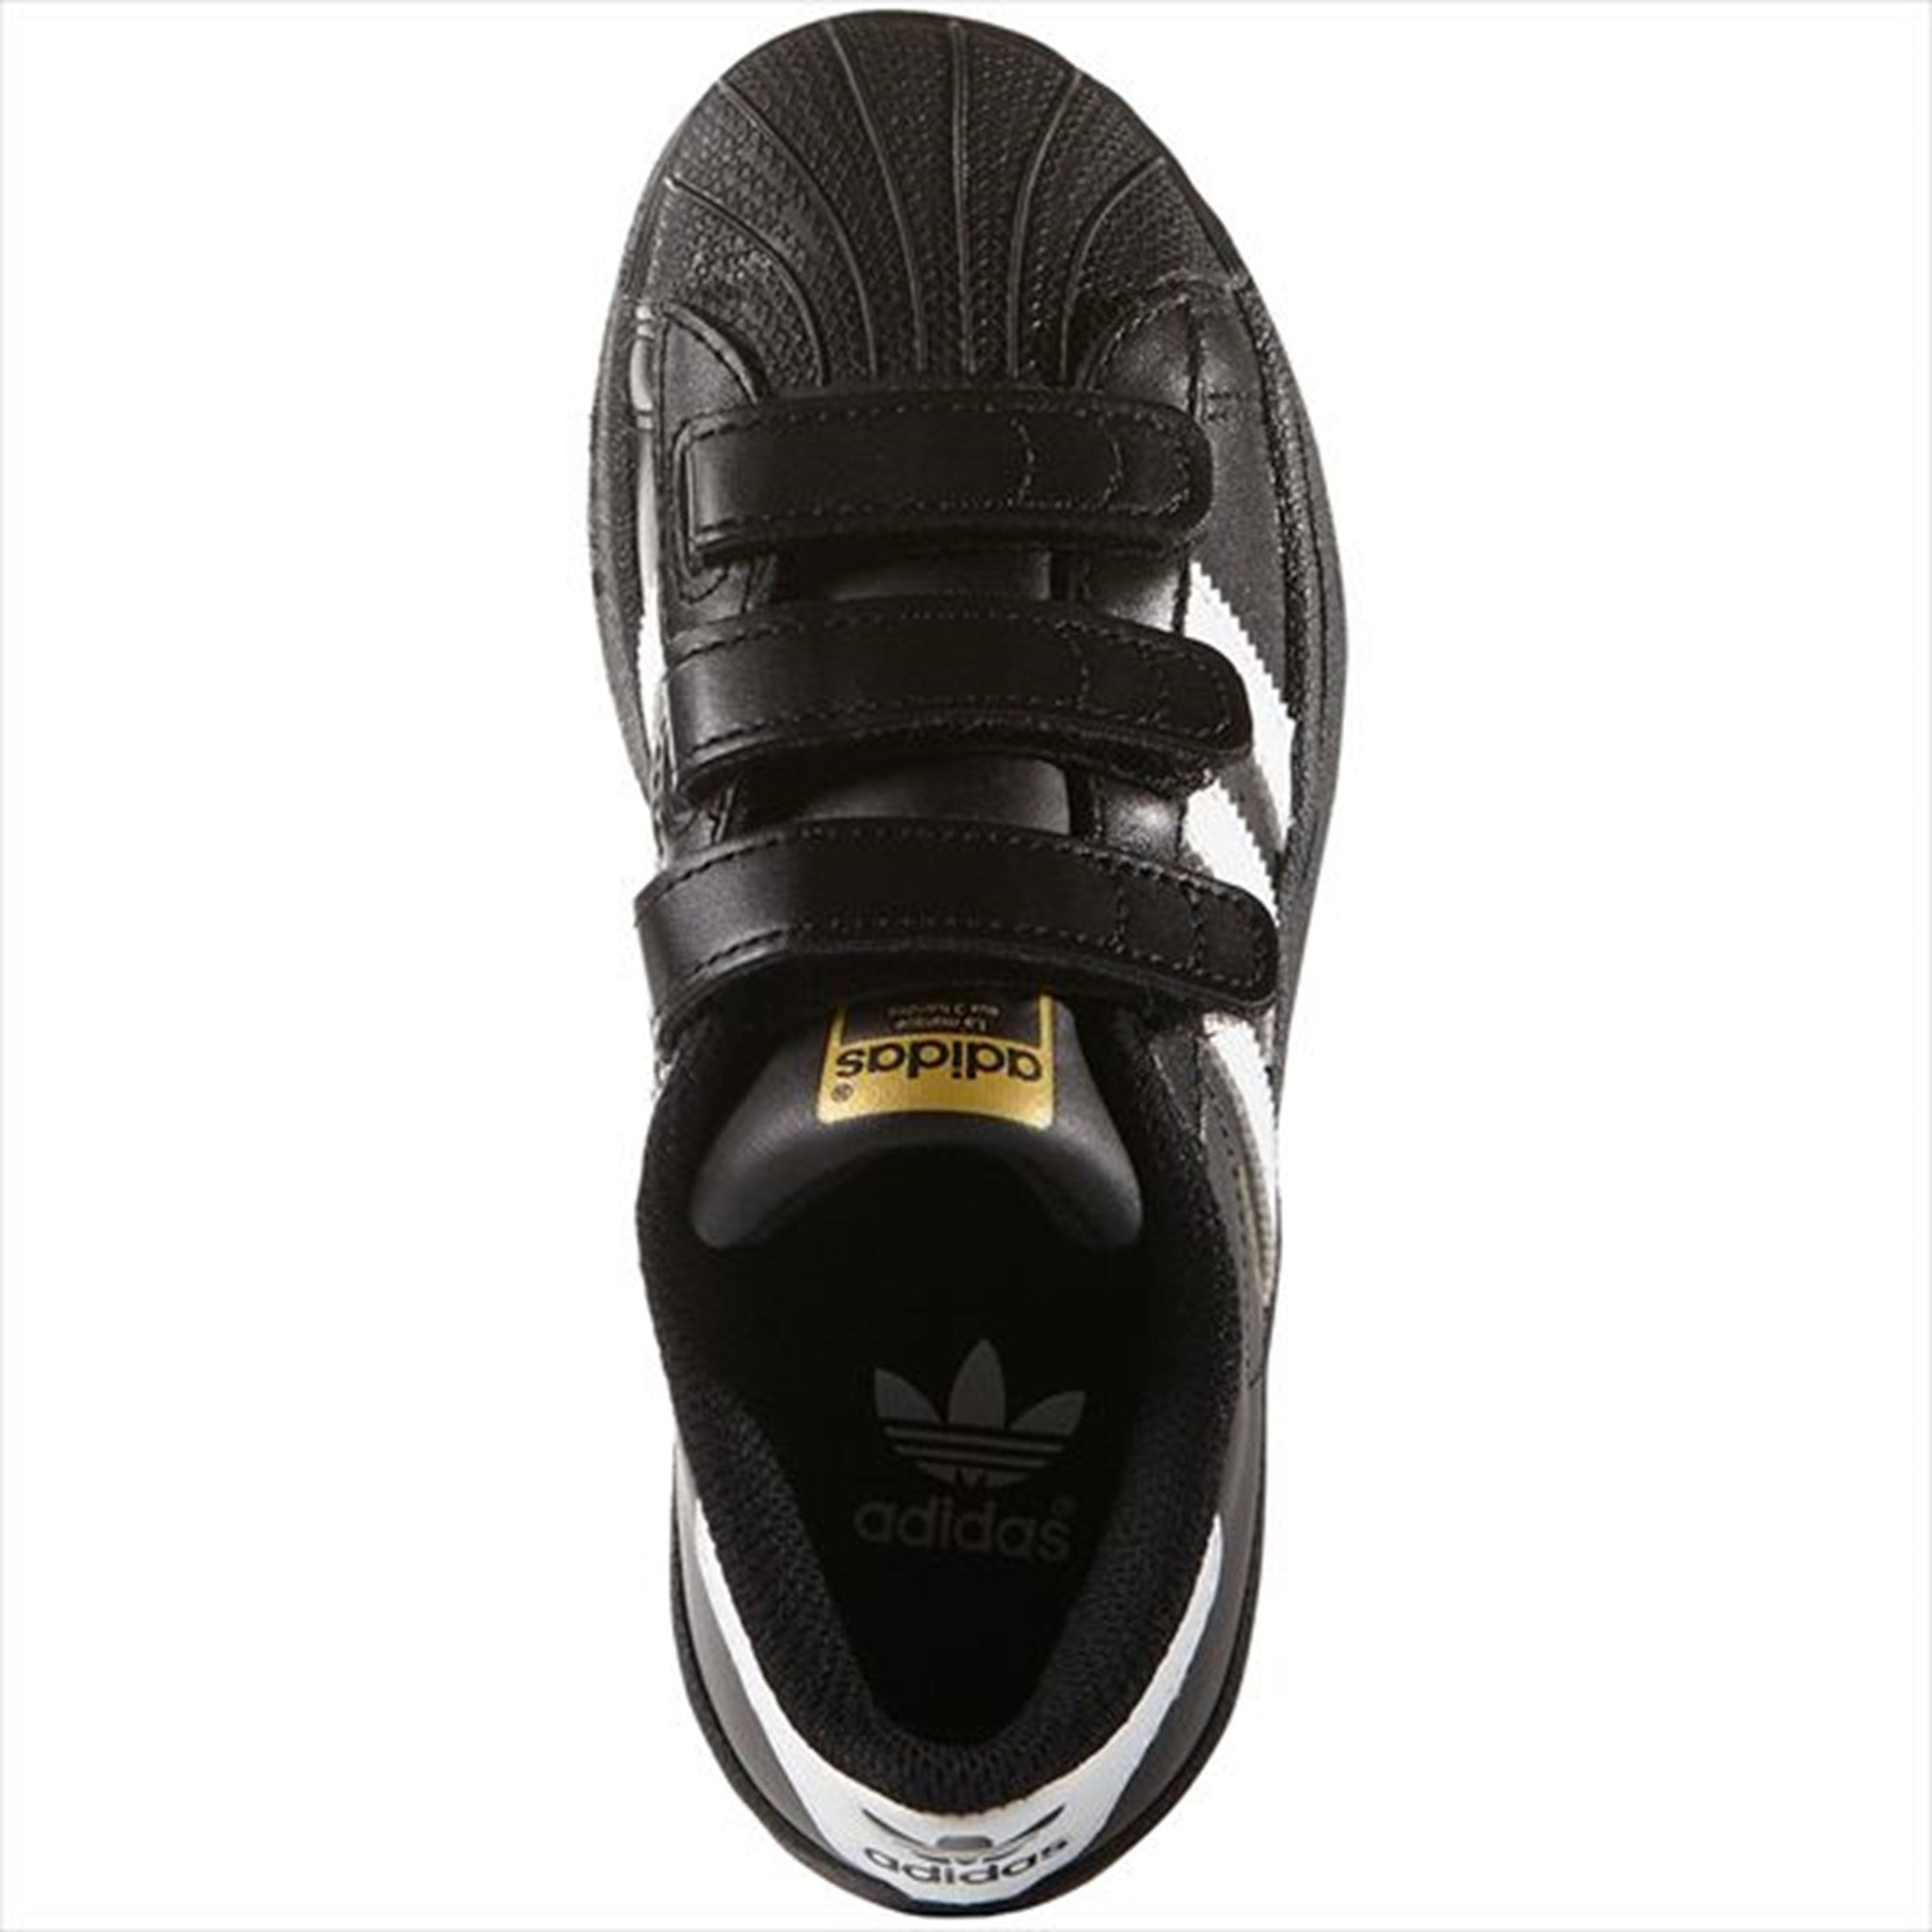 adidas Superstar Sneakers Black/White 2